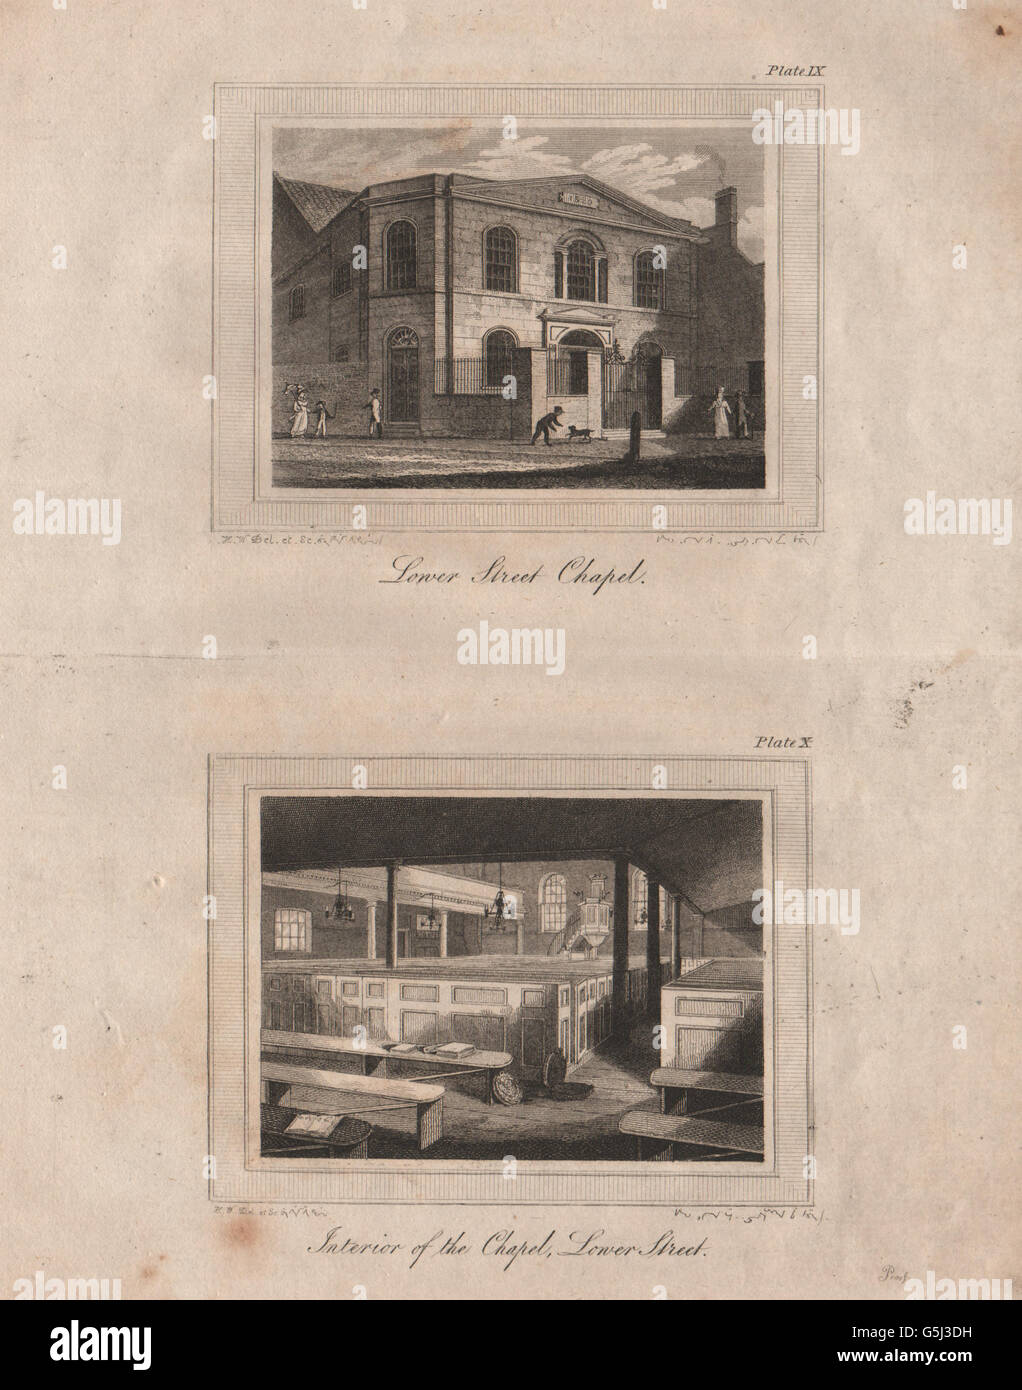 ISLINGTON PARISH: Lower Street (now Essex Road) Chapel. Interior & exterior 1823 Stock Photo